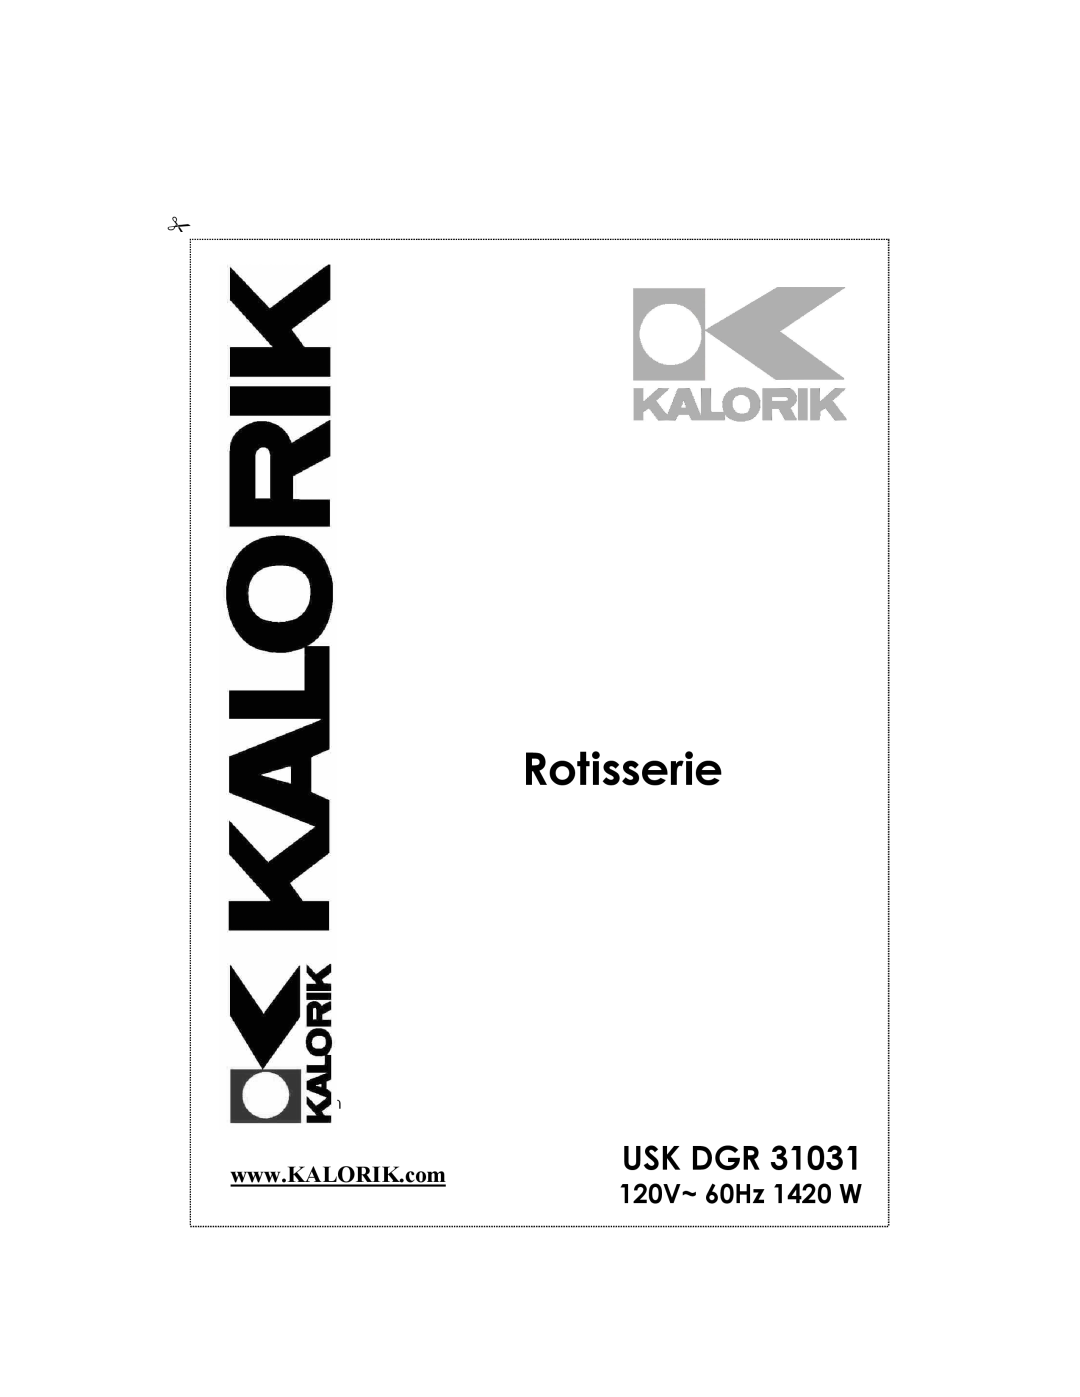 Kalorik USK DGR 31031 manual 120V~ 60Hz 1420 W, Rotisserie, Usk Dgr, I/B Version 